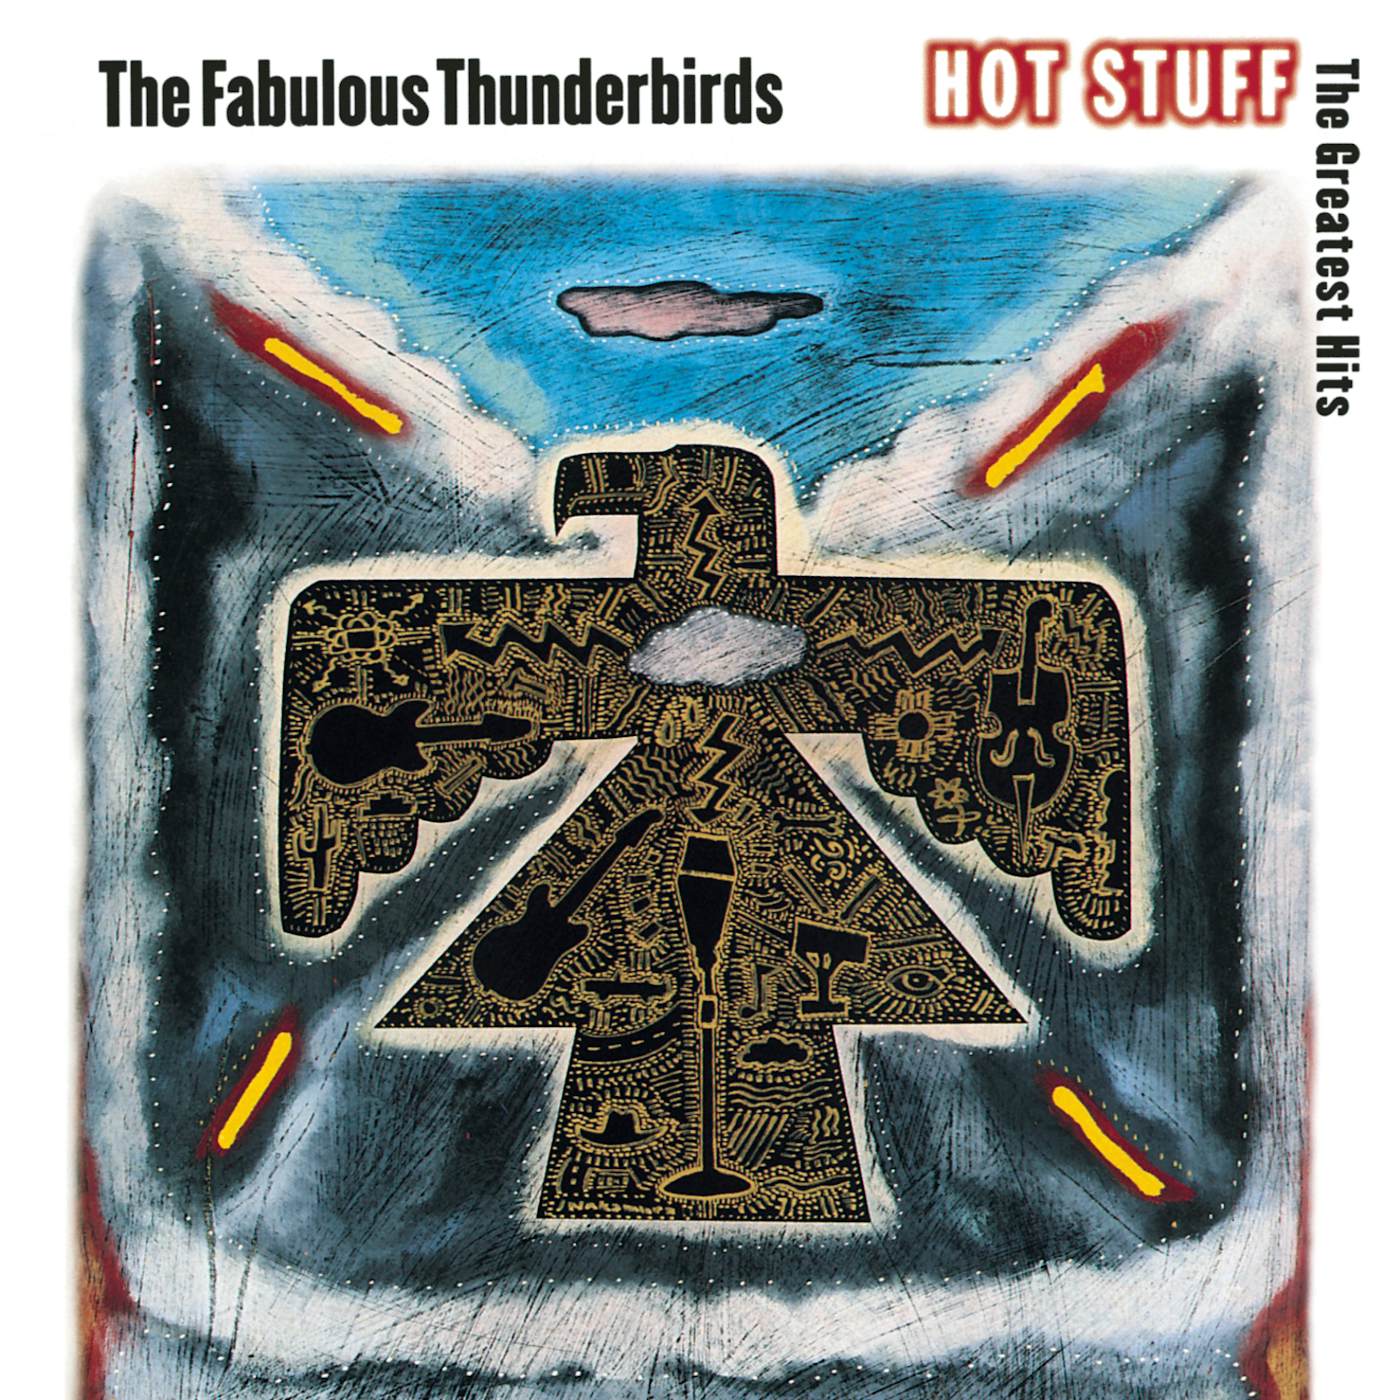 The Fabulous Thunderbirds HOT STUFF: THE GREATEST HITS CD